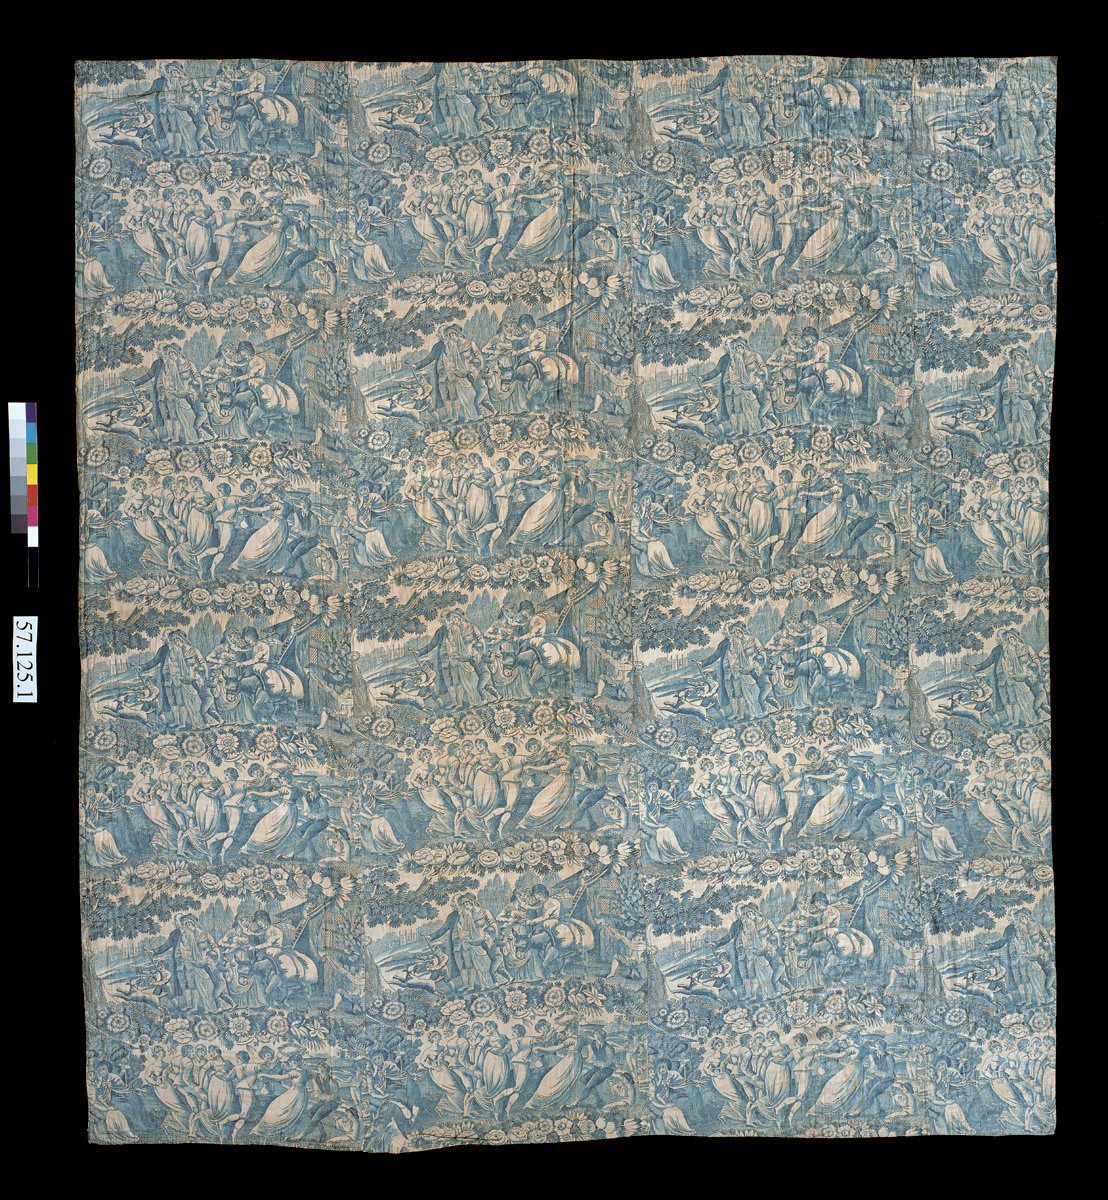 Textiles (Furnishing) - Quilt